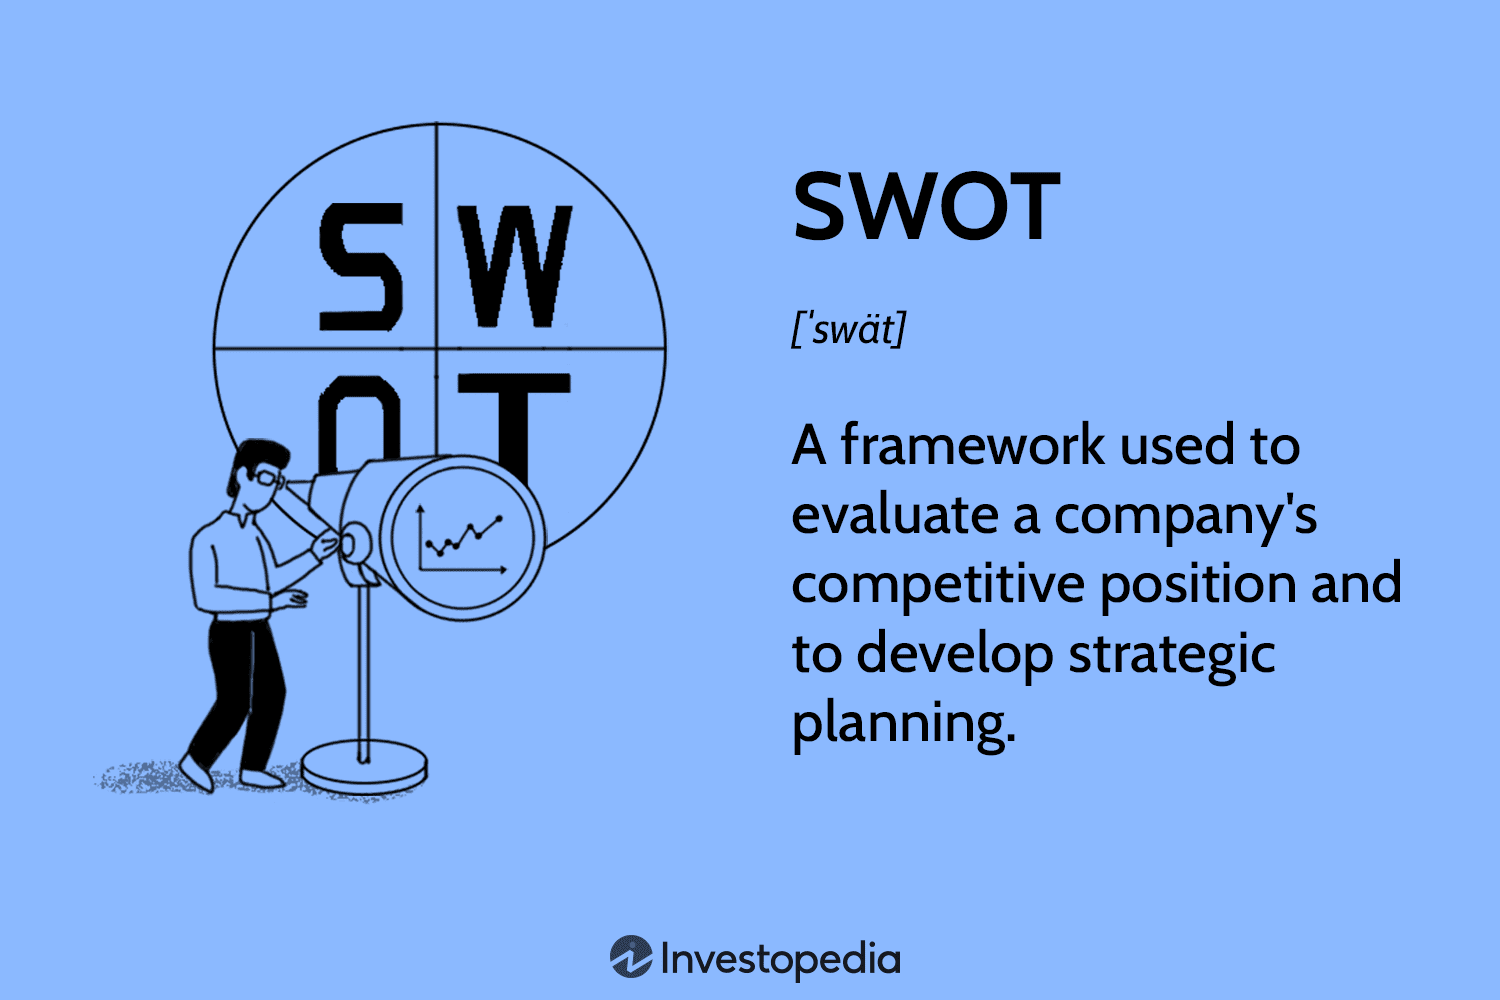  SWOT Analysis